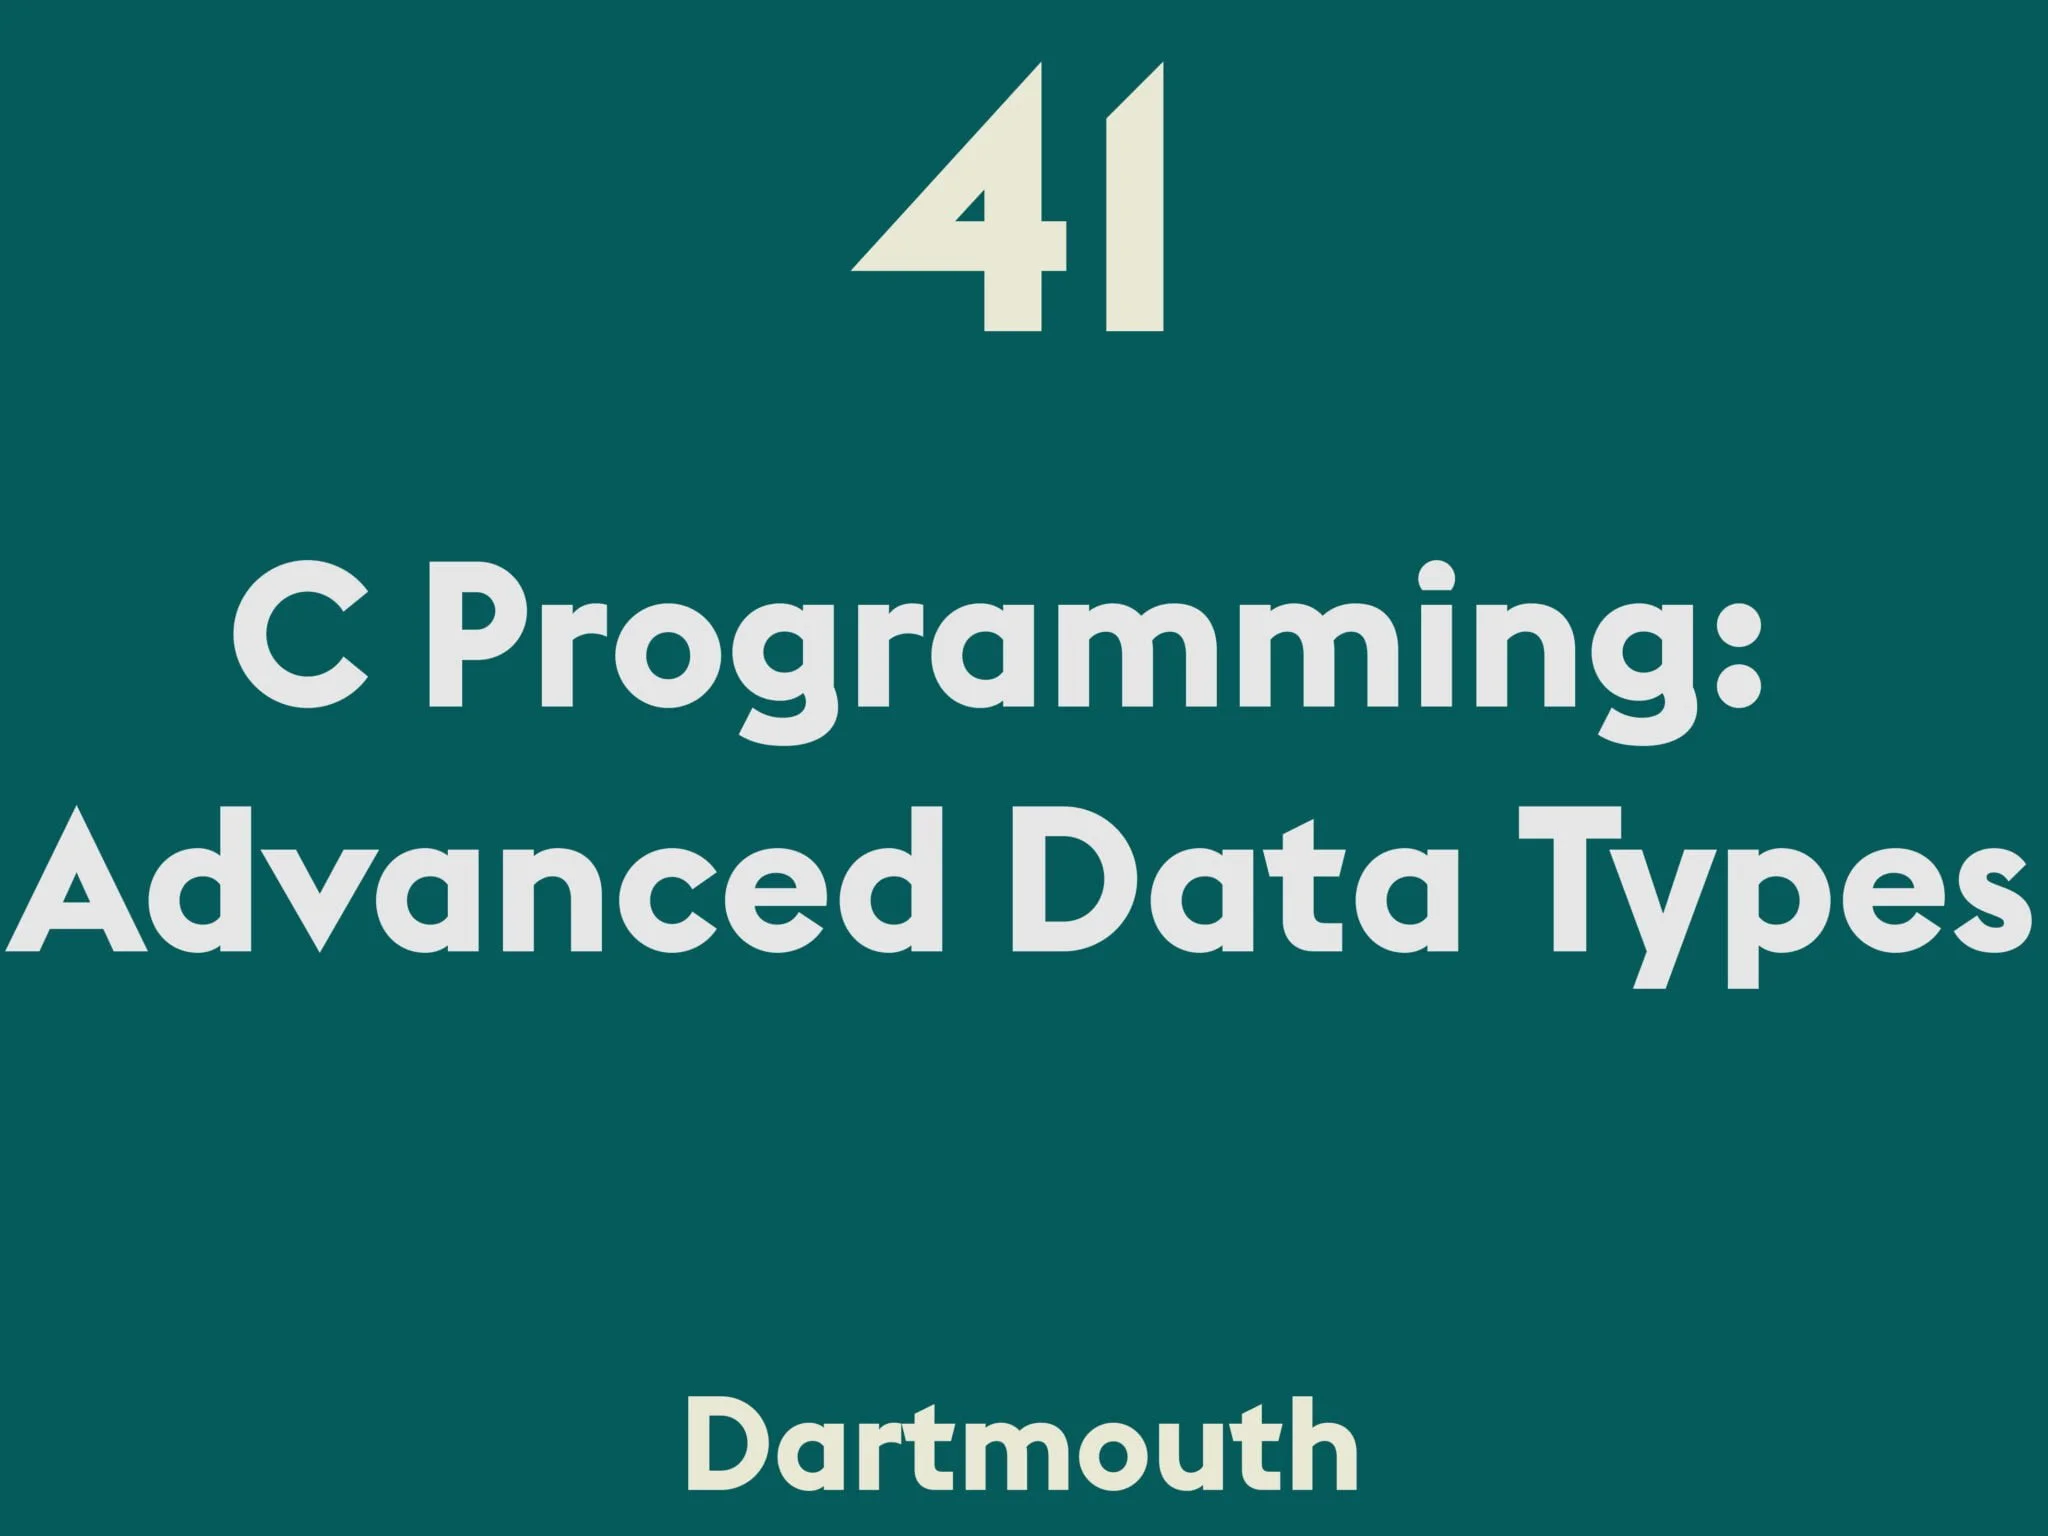 C Programming: Advanced Data Types